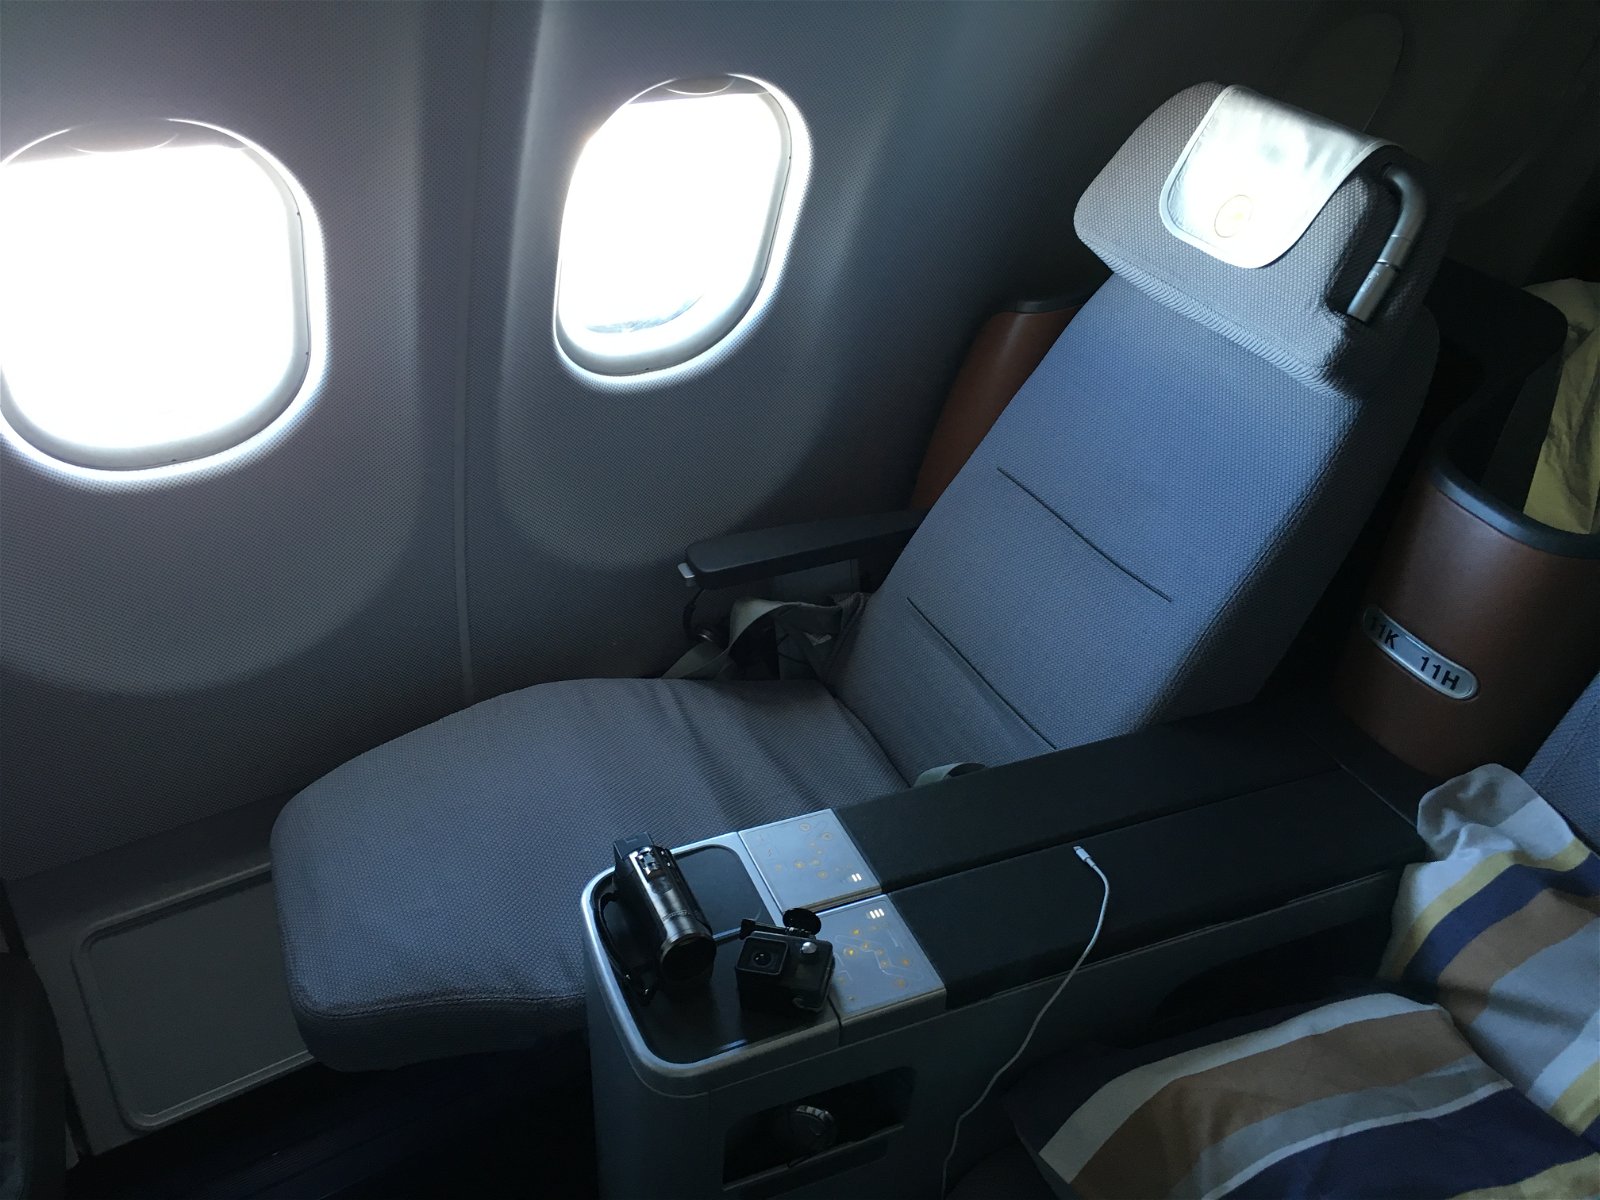 Lufthansa seat recline 